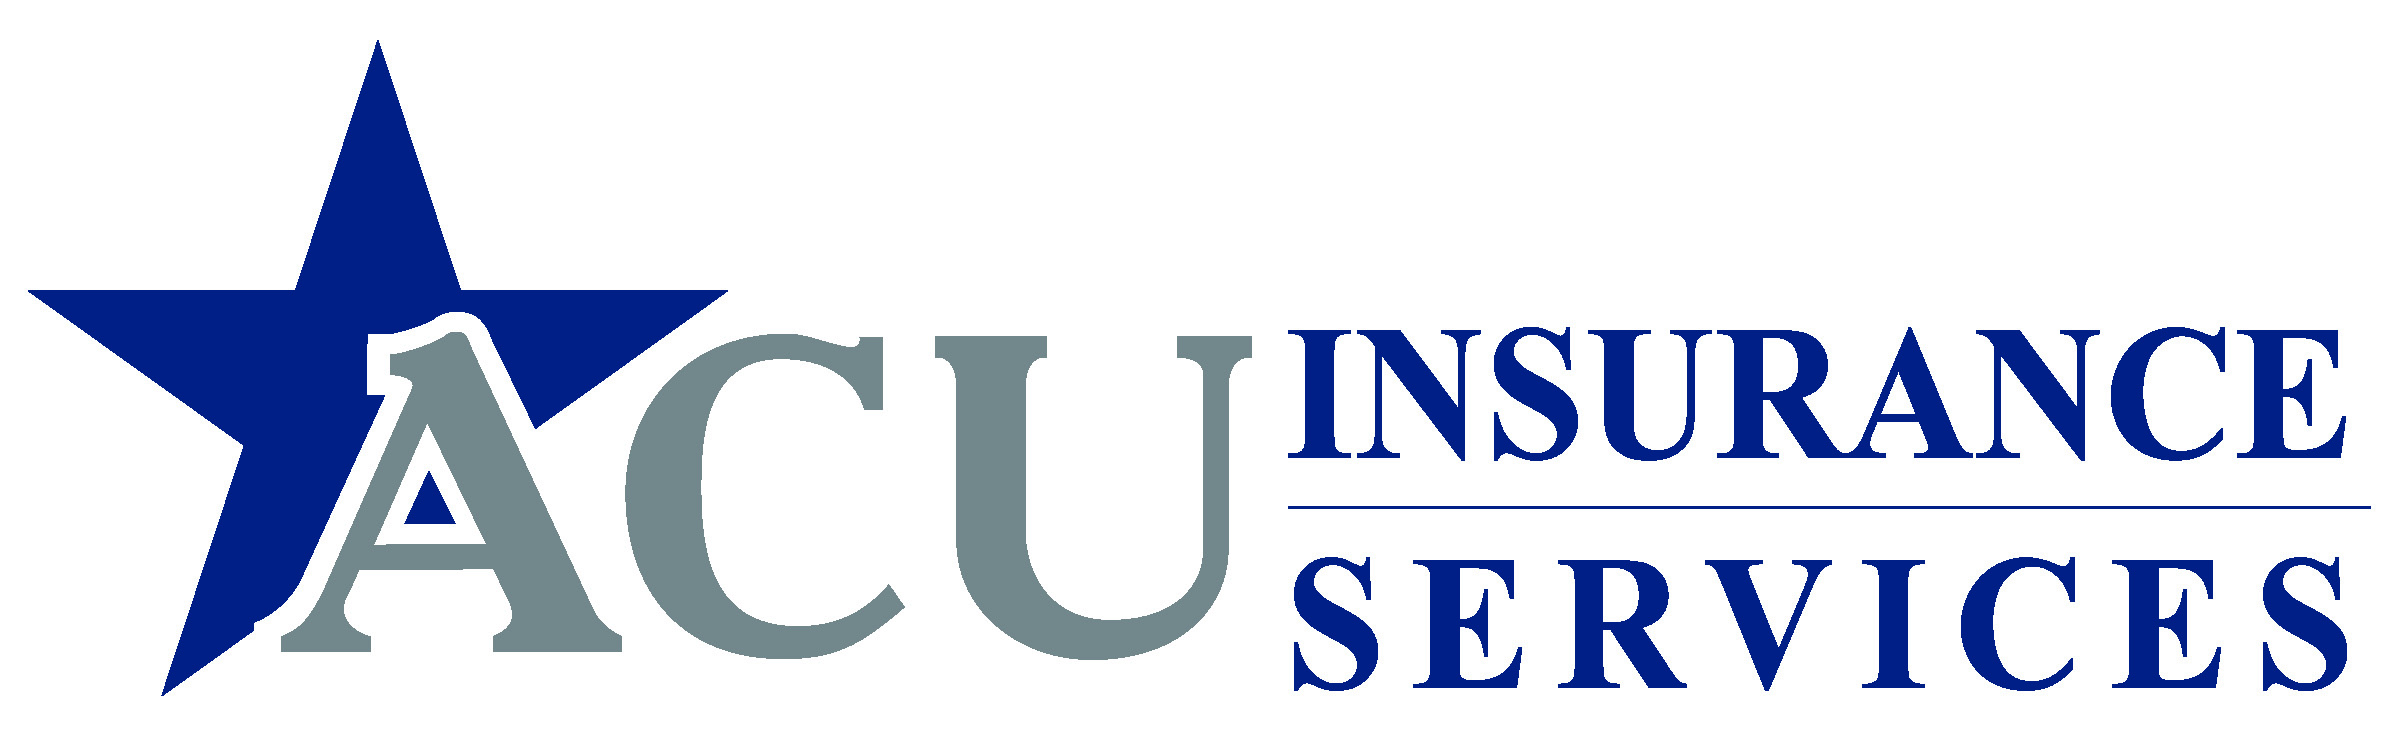 ACU Insurance Services